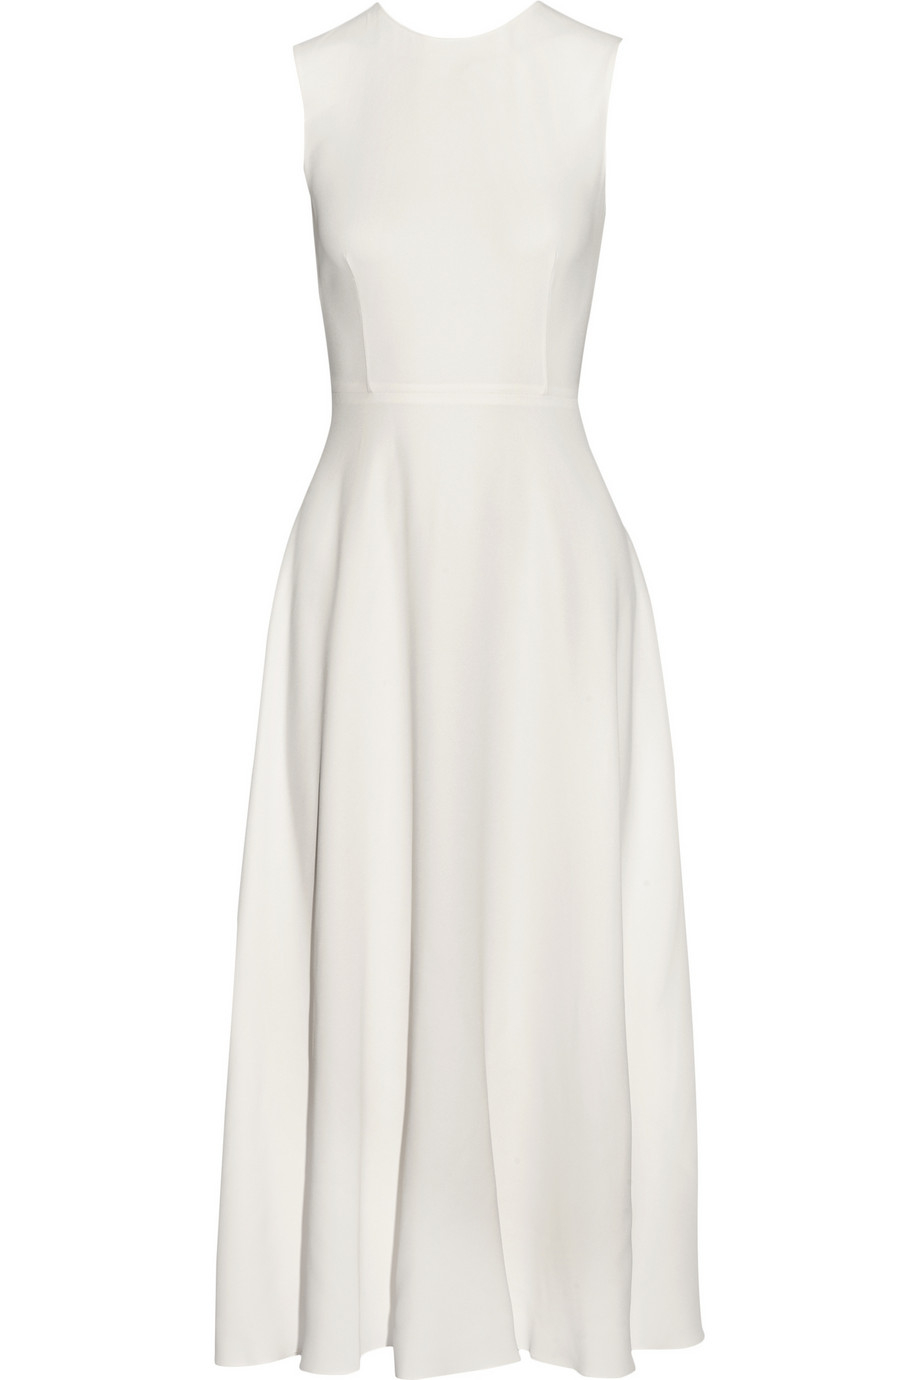 Lyst - The Row Jil Stretch-Cady Midi Dress in White